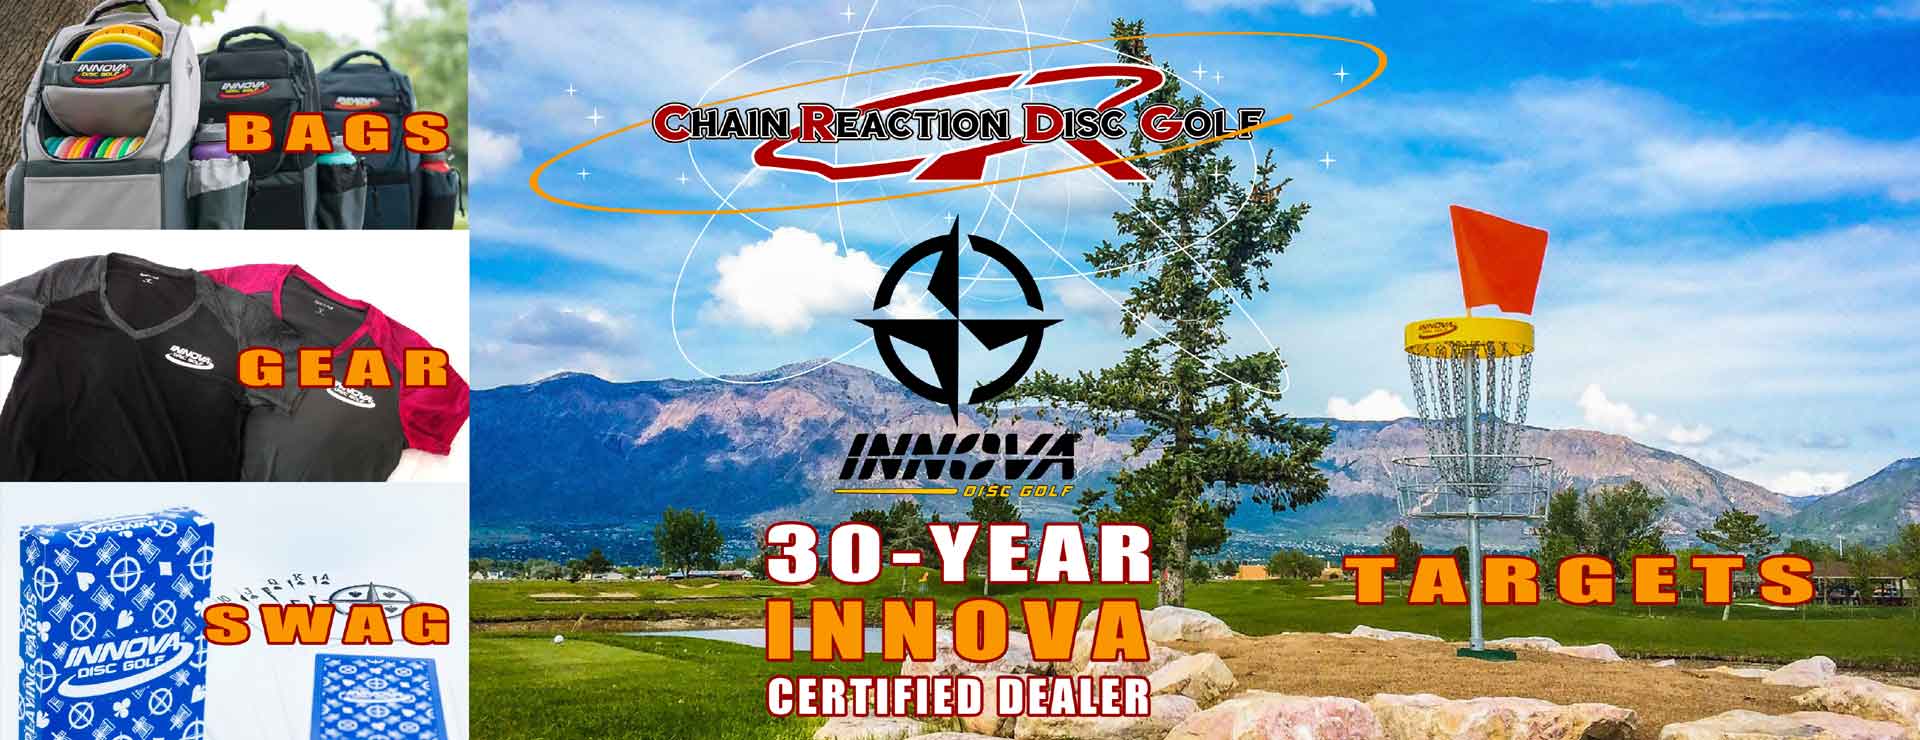 Chain Reaction Disc Golf Innova Gear Home Slide